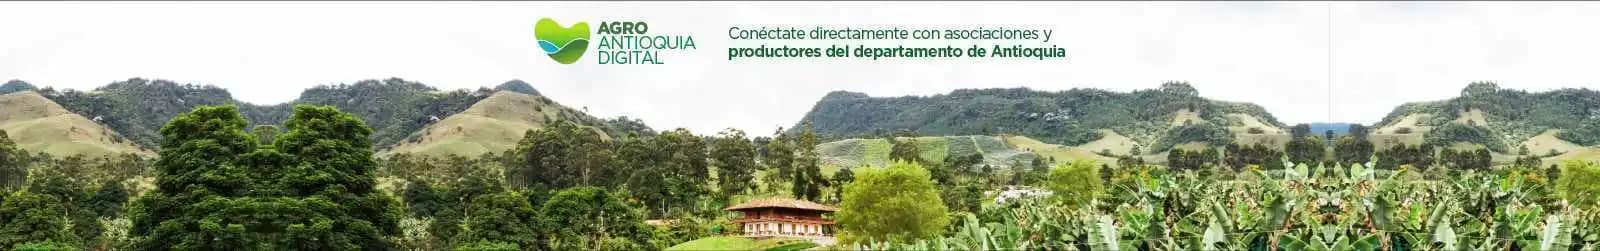 Agro Antioquia Digital - AAD